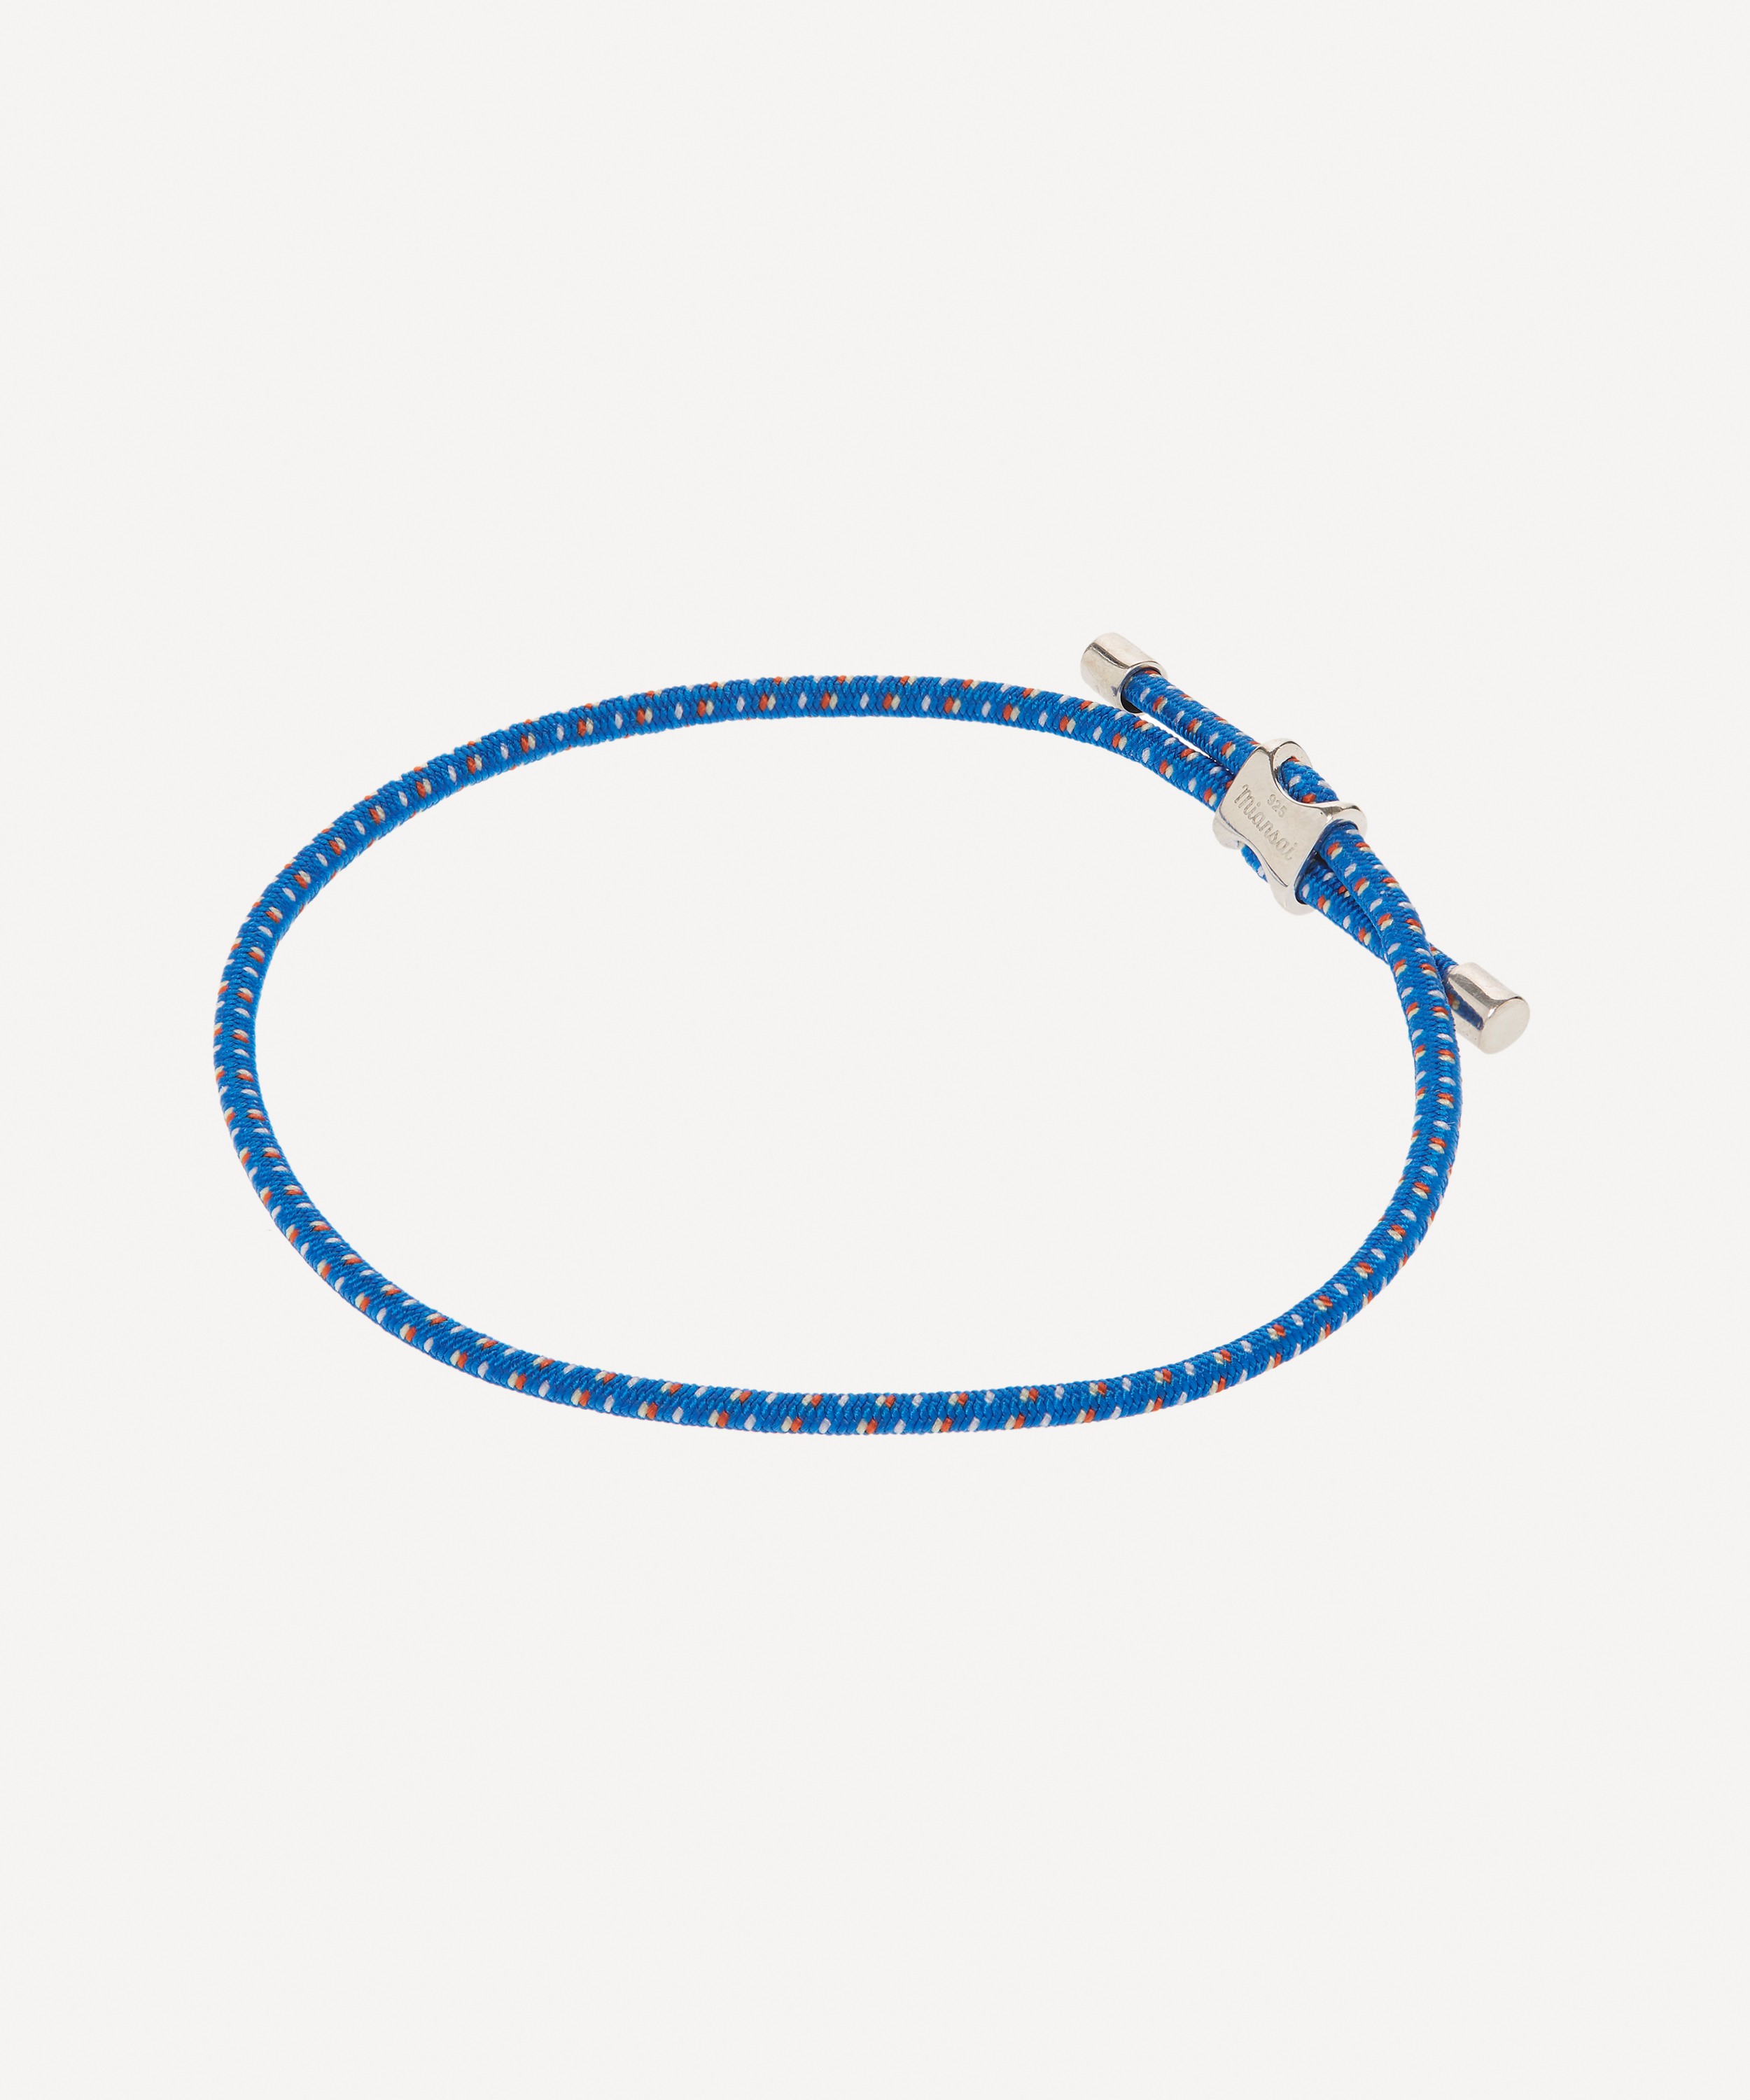 Miansai Men's Orson Loop Leather Bracelet, Sterling Silver, Size L